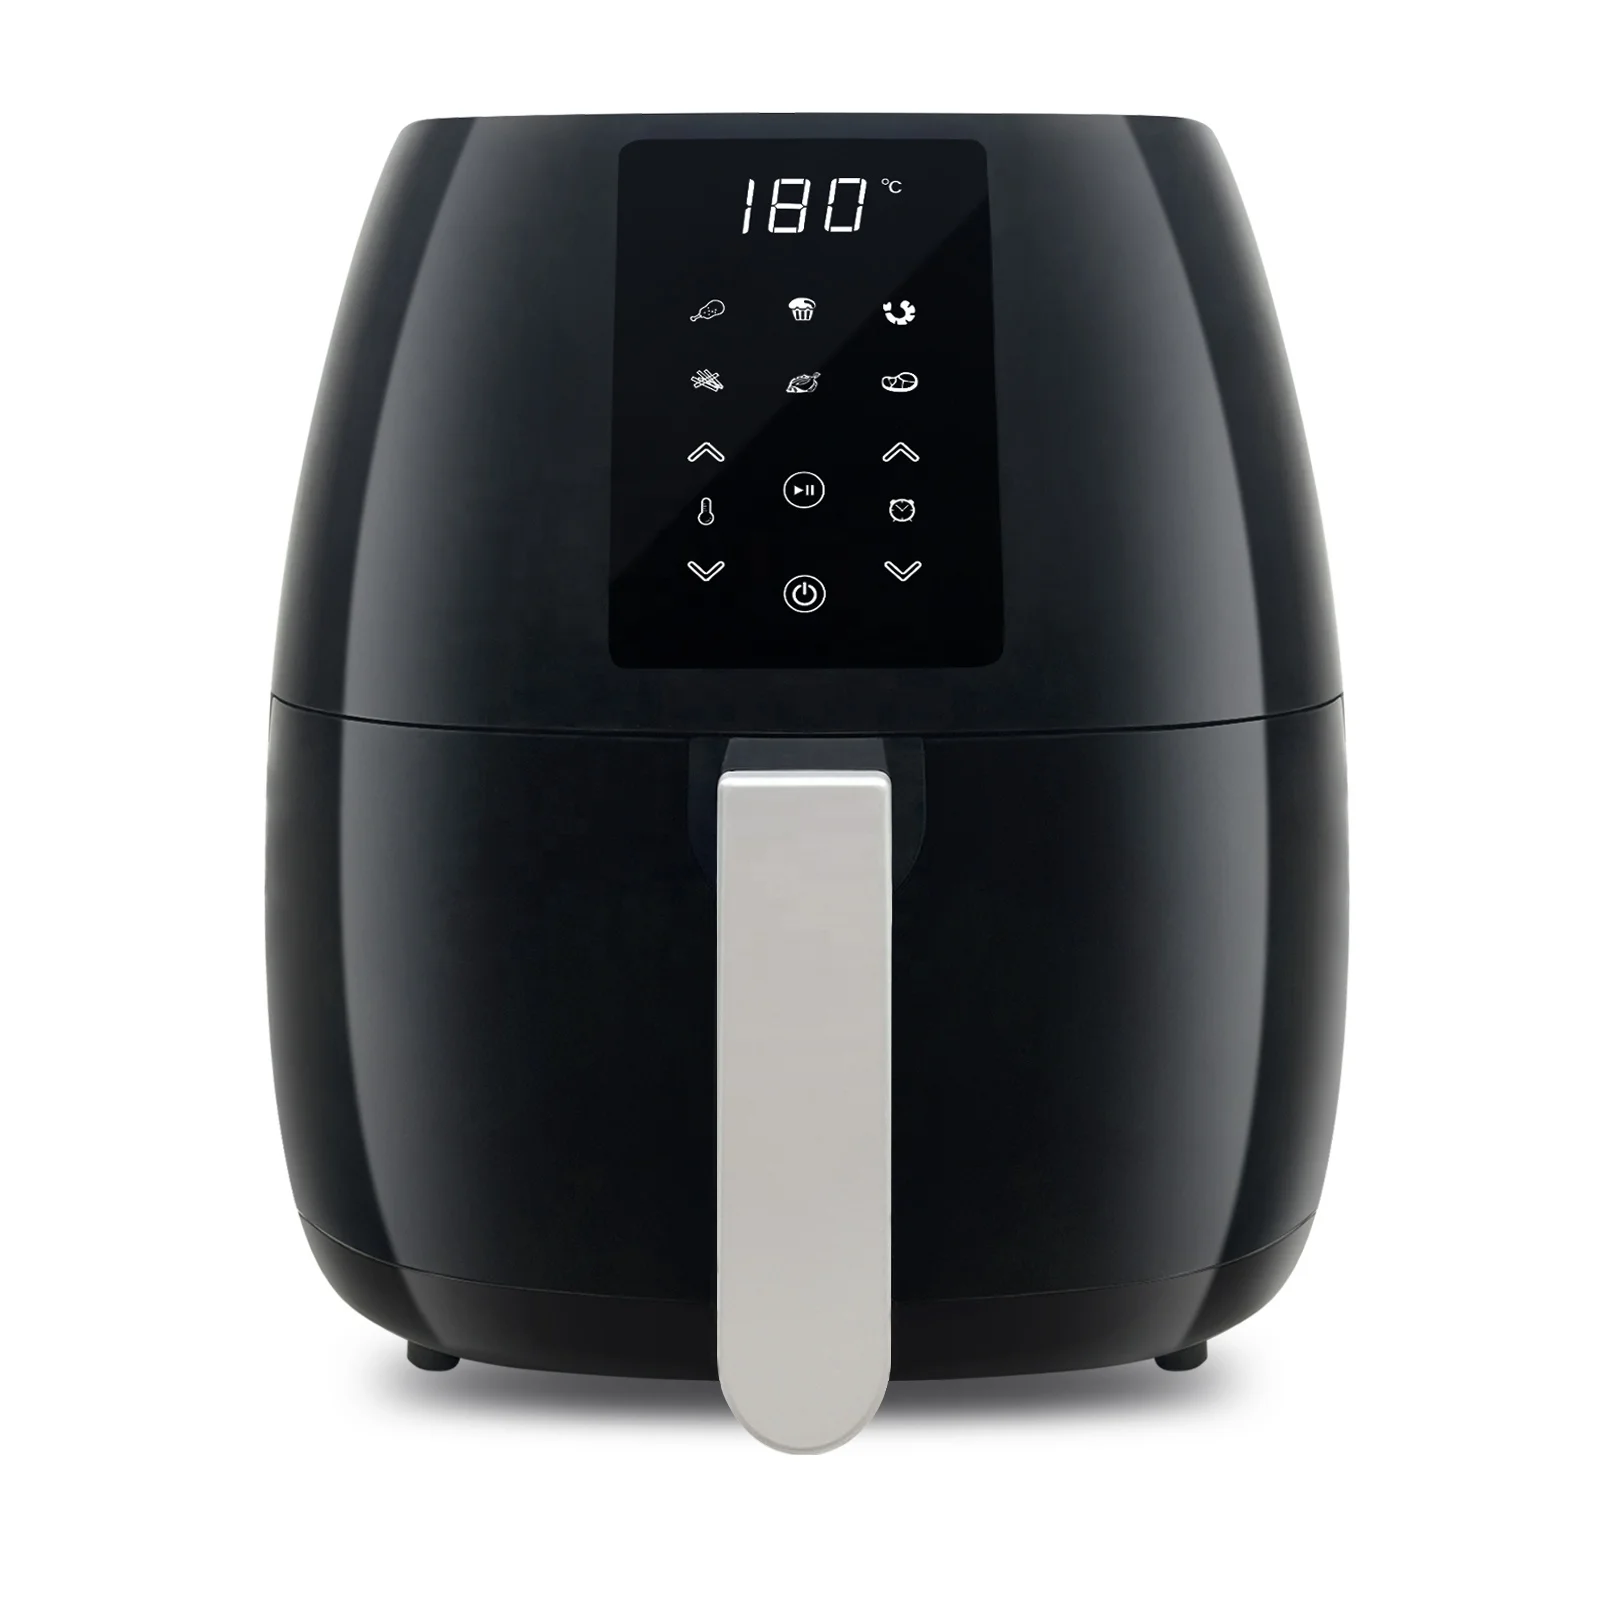 Buy Air 5.5 Digital Air Fryer In Stock With Good Price,Healthy Low Fat Cooking Pot Intelligent Timing - Buy Air 5.5 Liter Digital Electric Deep Fryers Digital Air